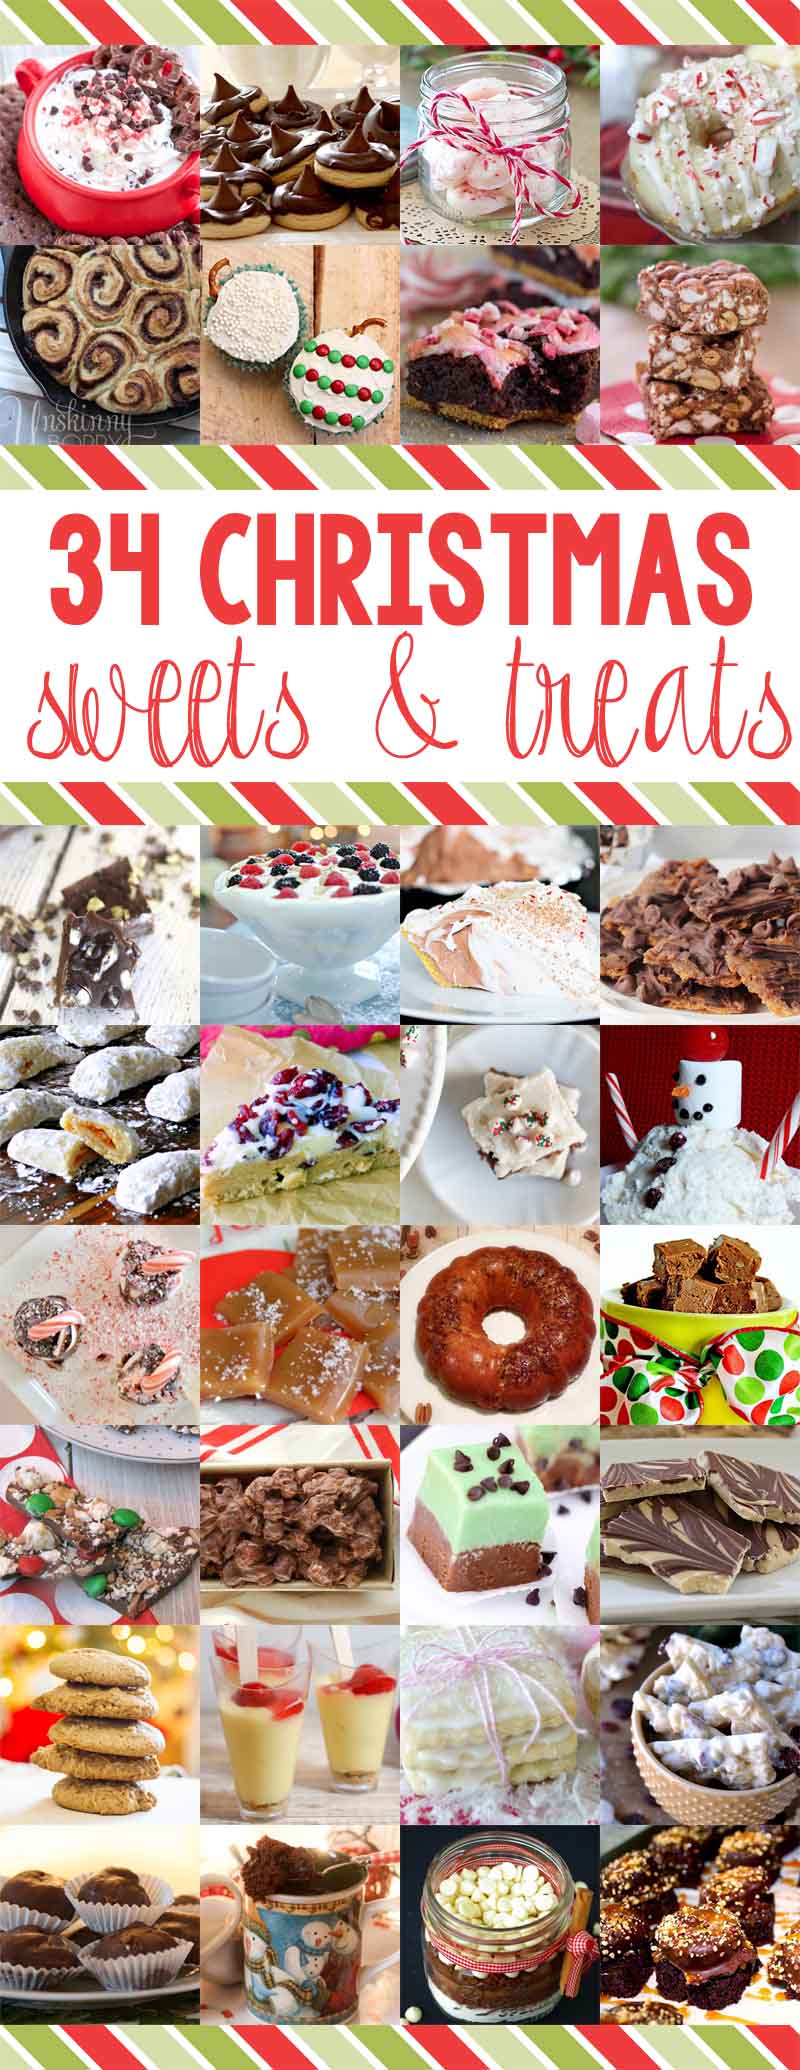 34 Christmas Treats & Sweets